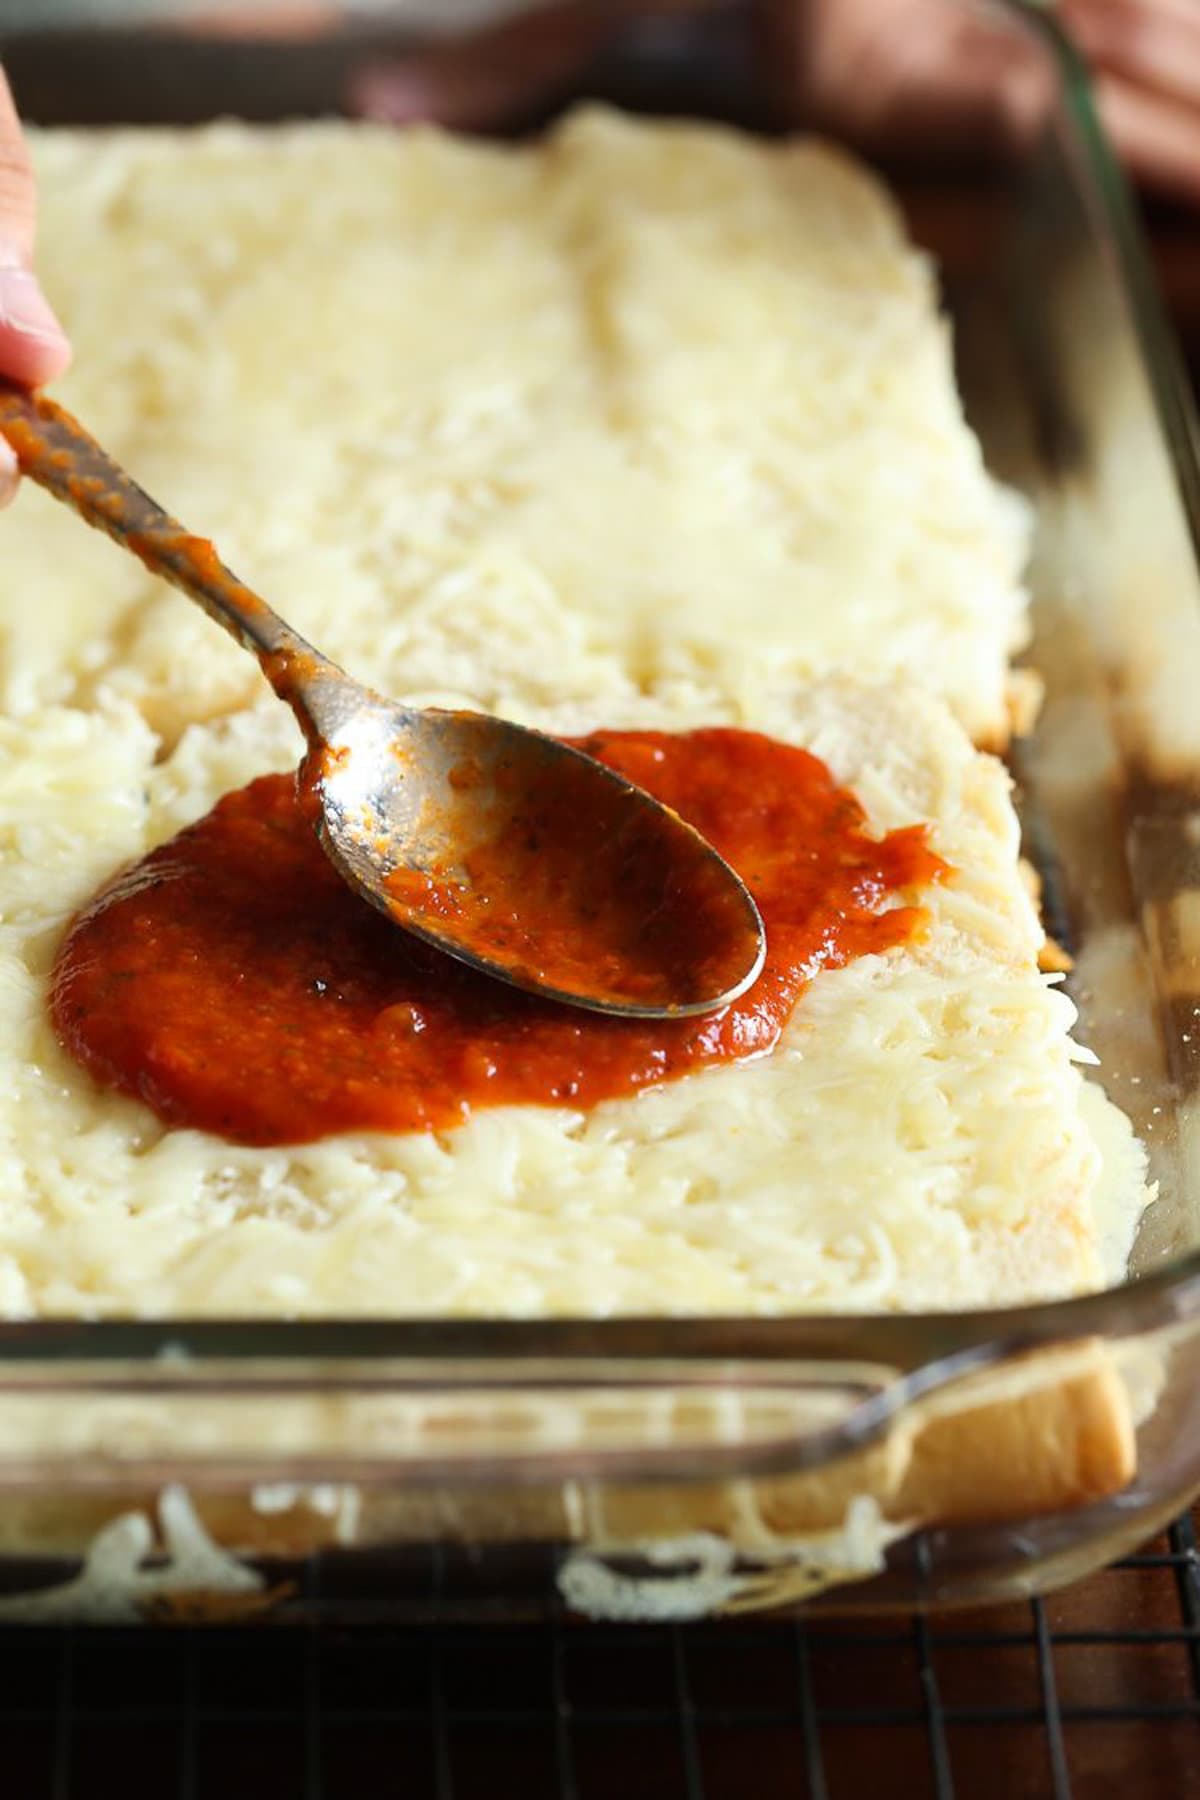 Tomato sauce spread on cheese